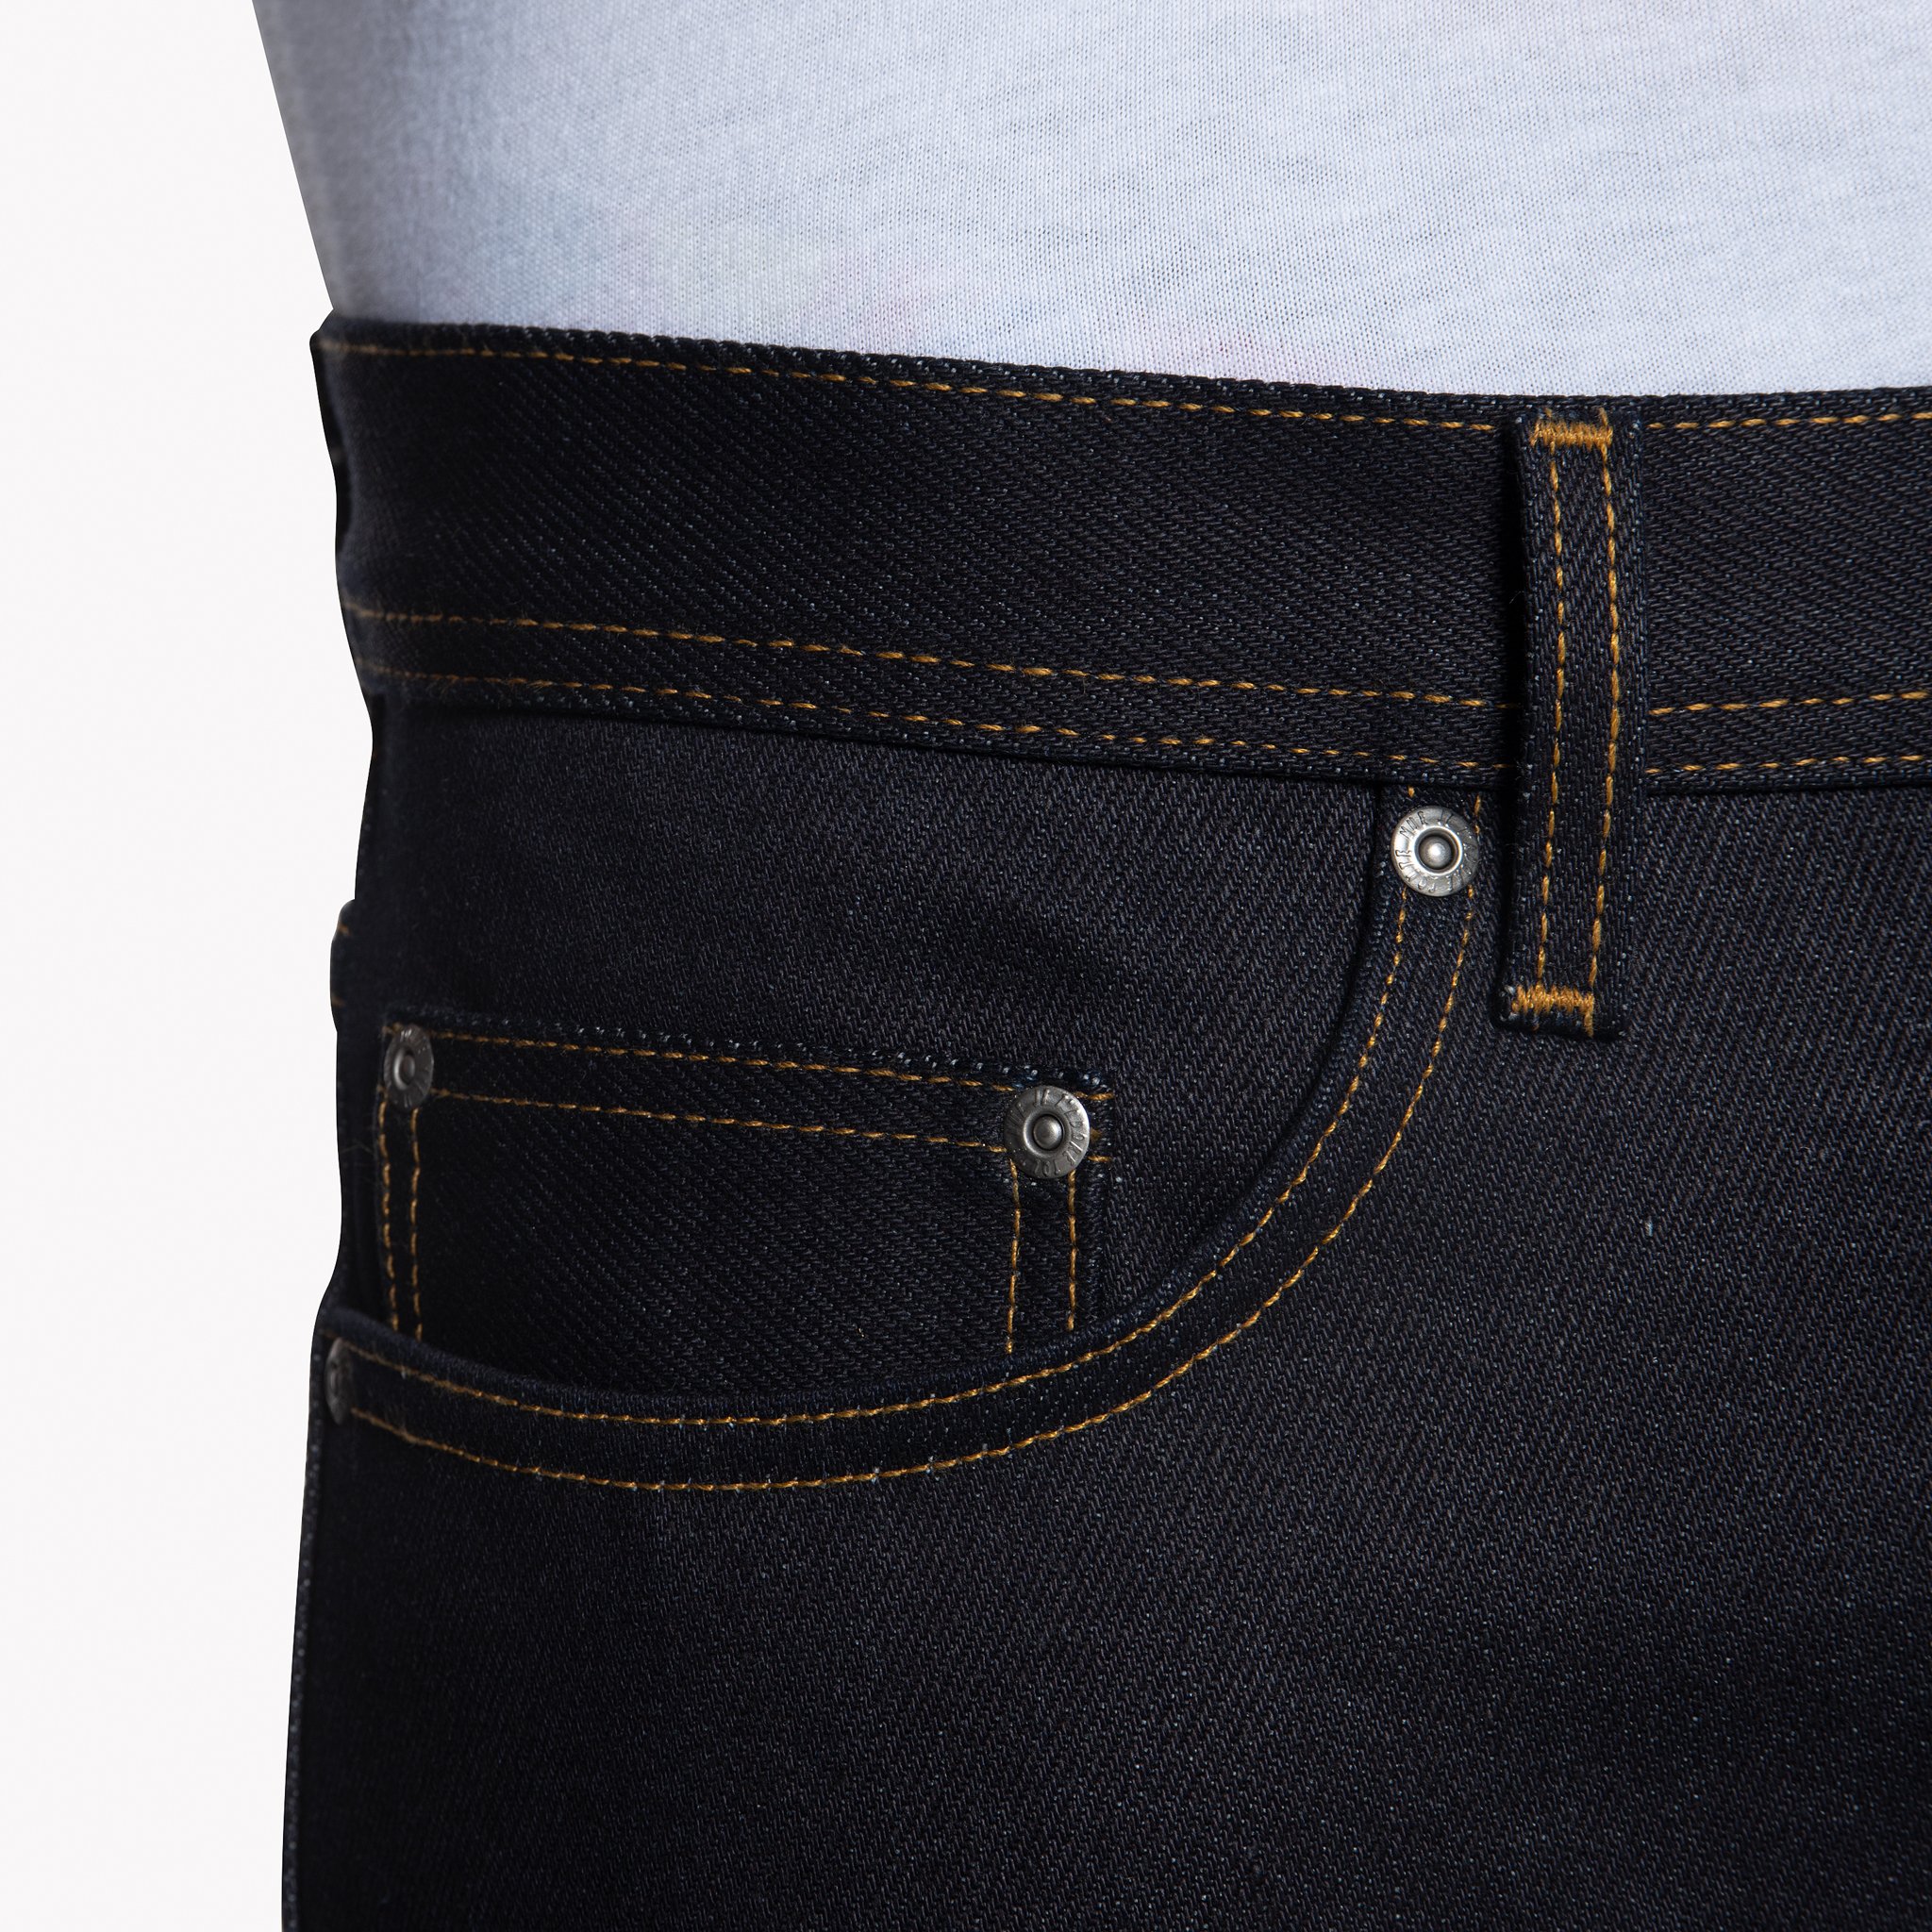  Elephant X S jeans - coin pocket 